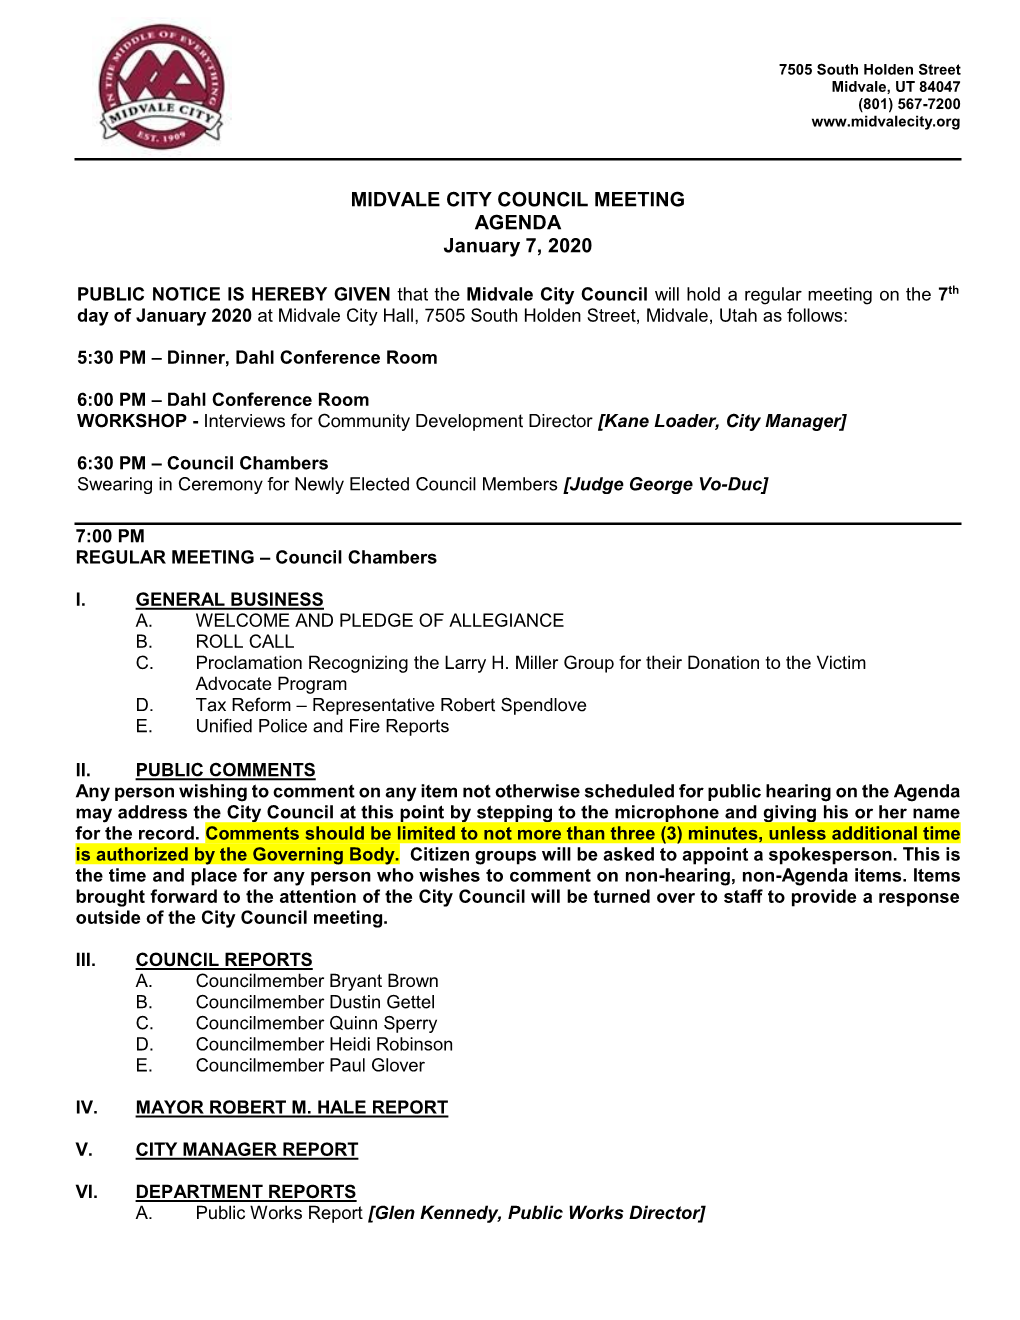 MIDVALE CITY COUNCIL MEETING AGENDA January 7, 2020